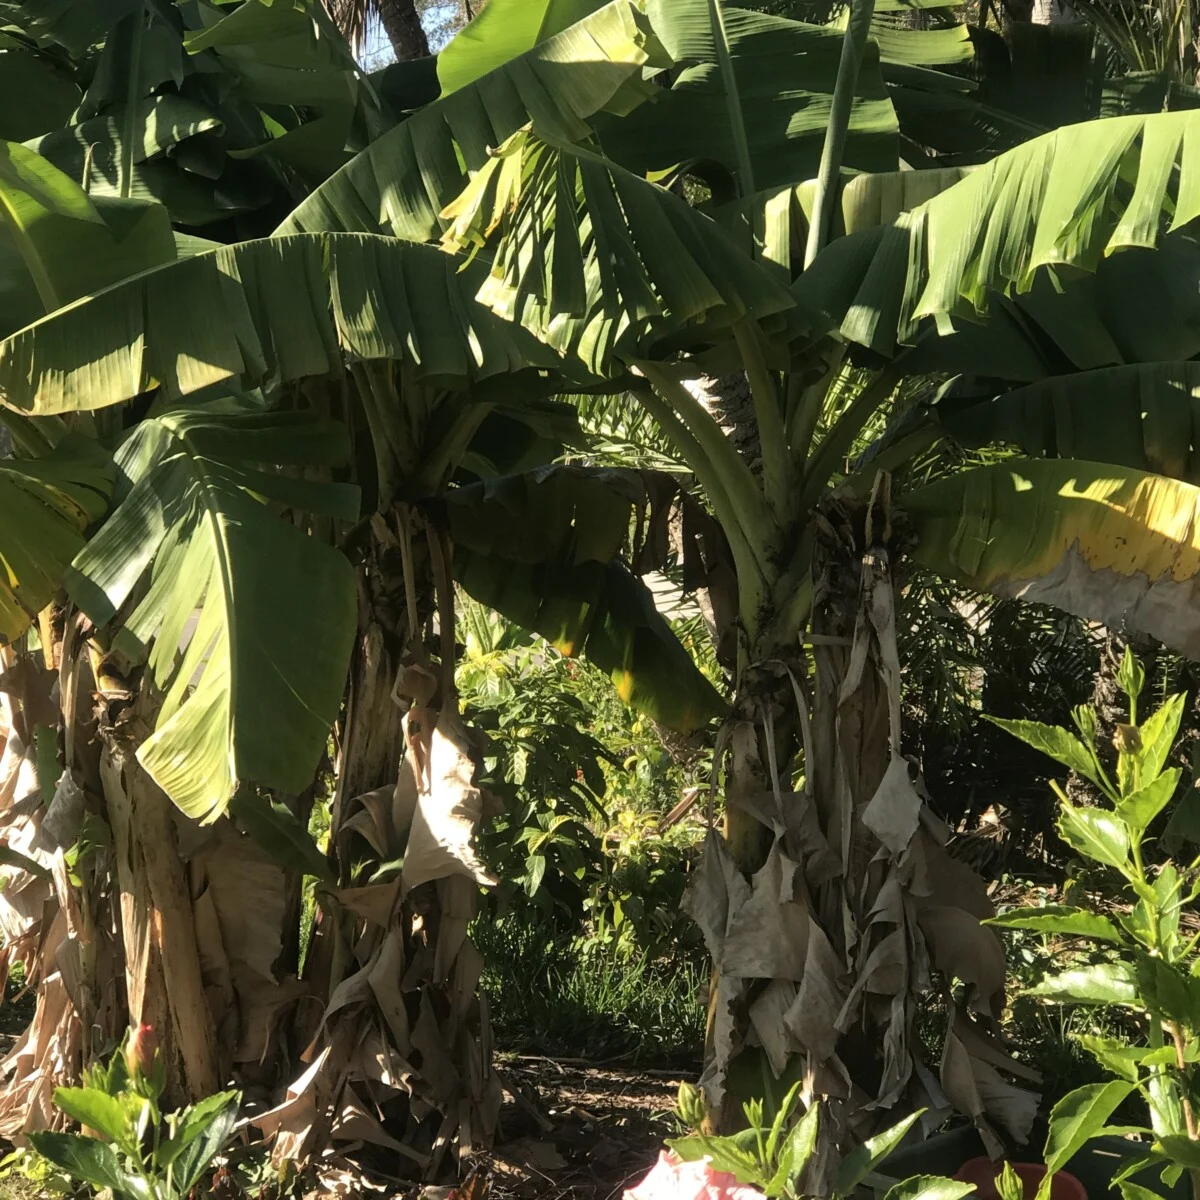 Large banana trees